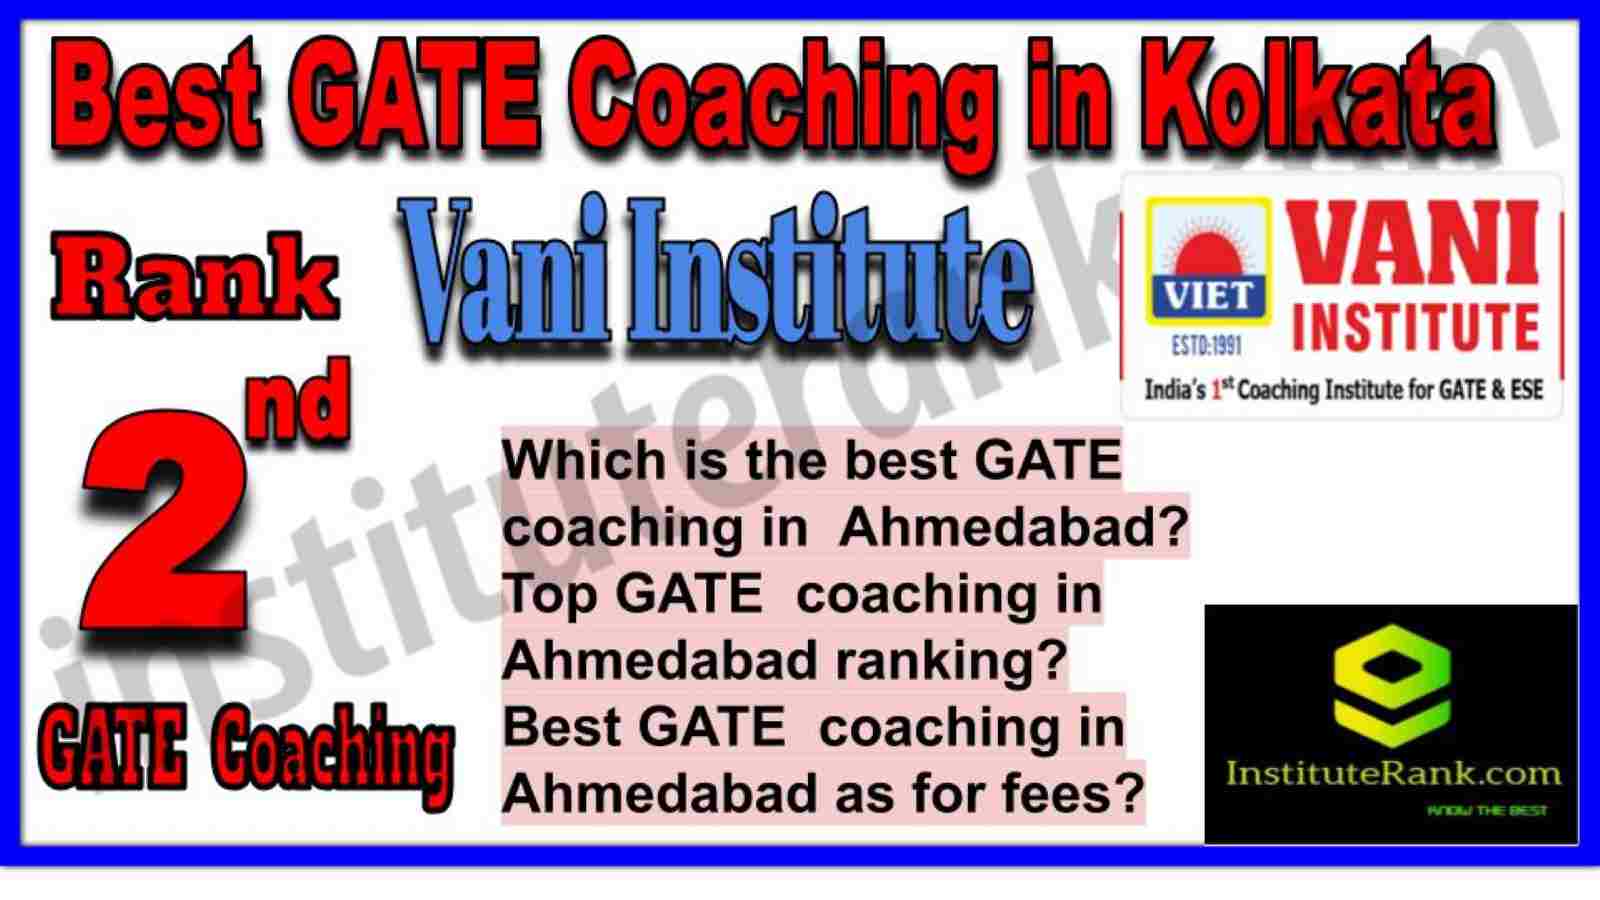 Rank 2 Vani Institute | Best GATE Coaching In Kolkata